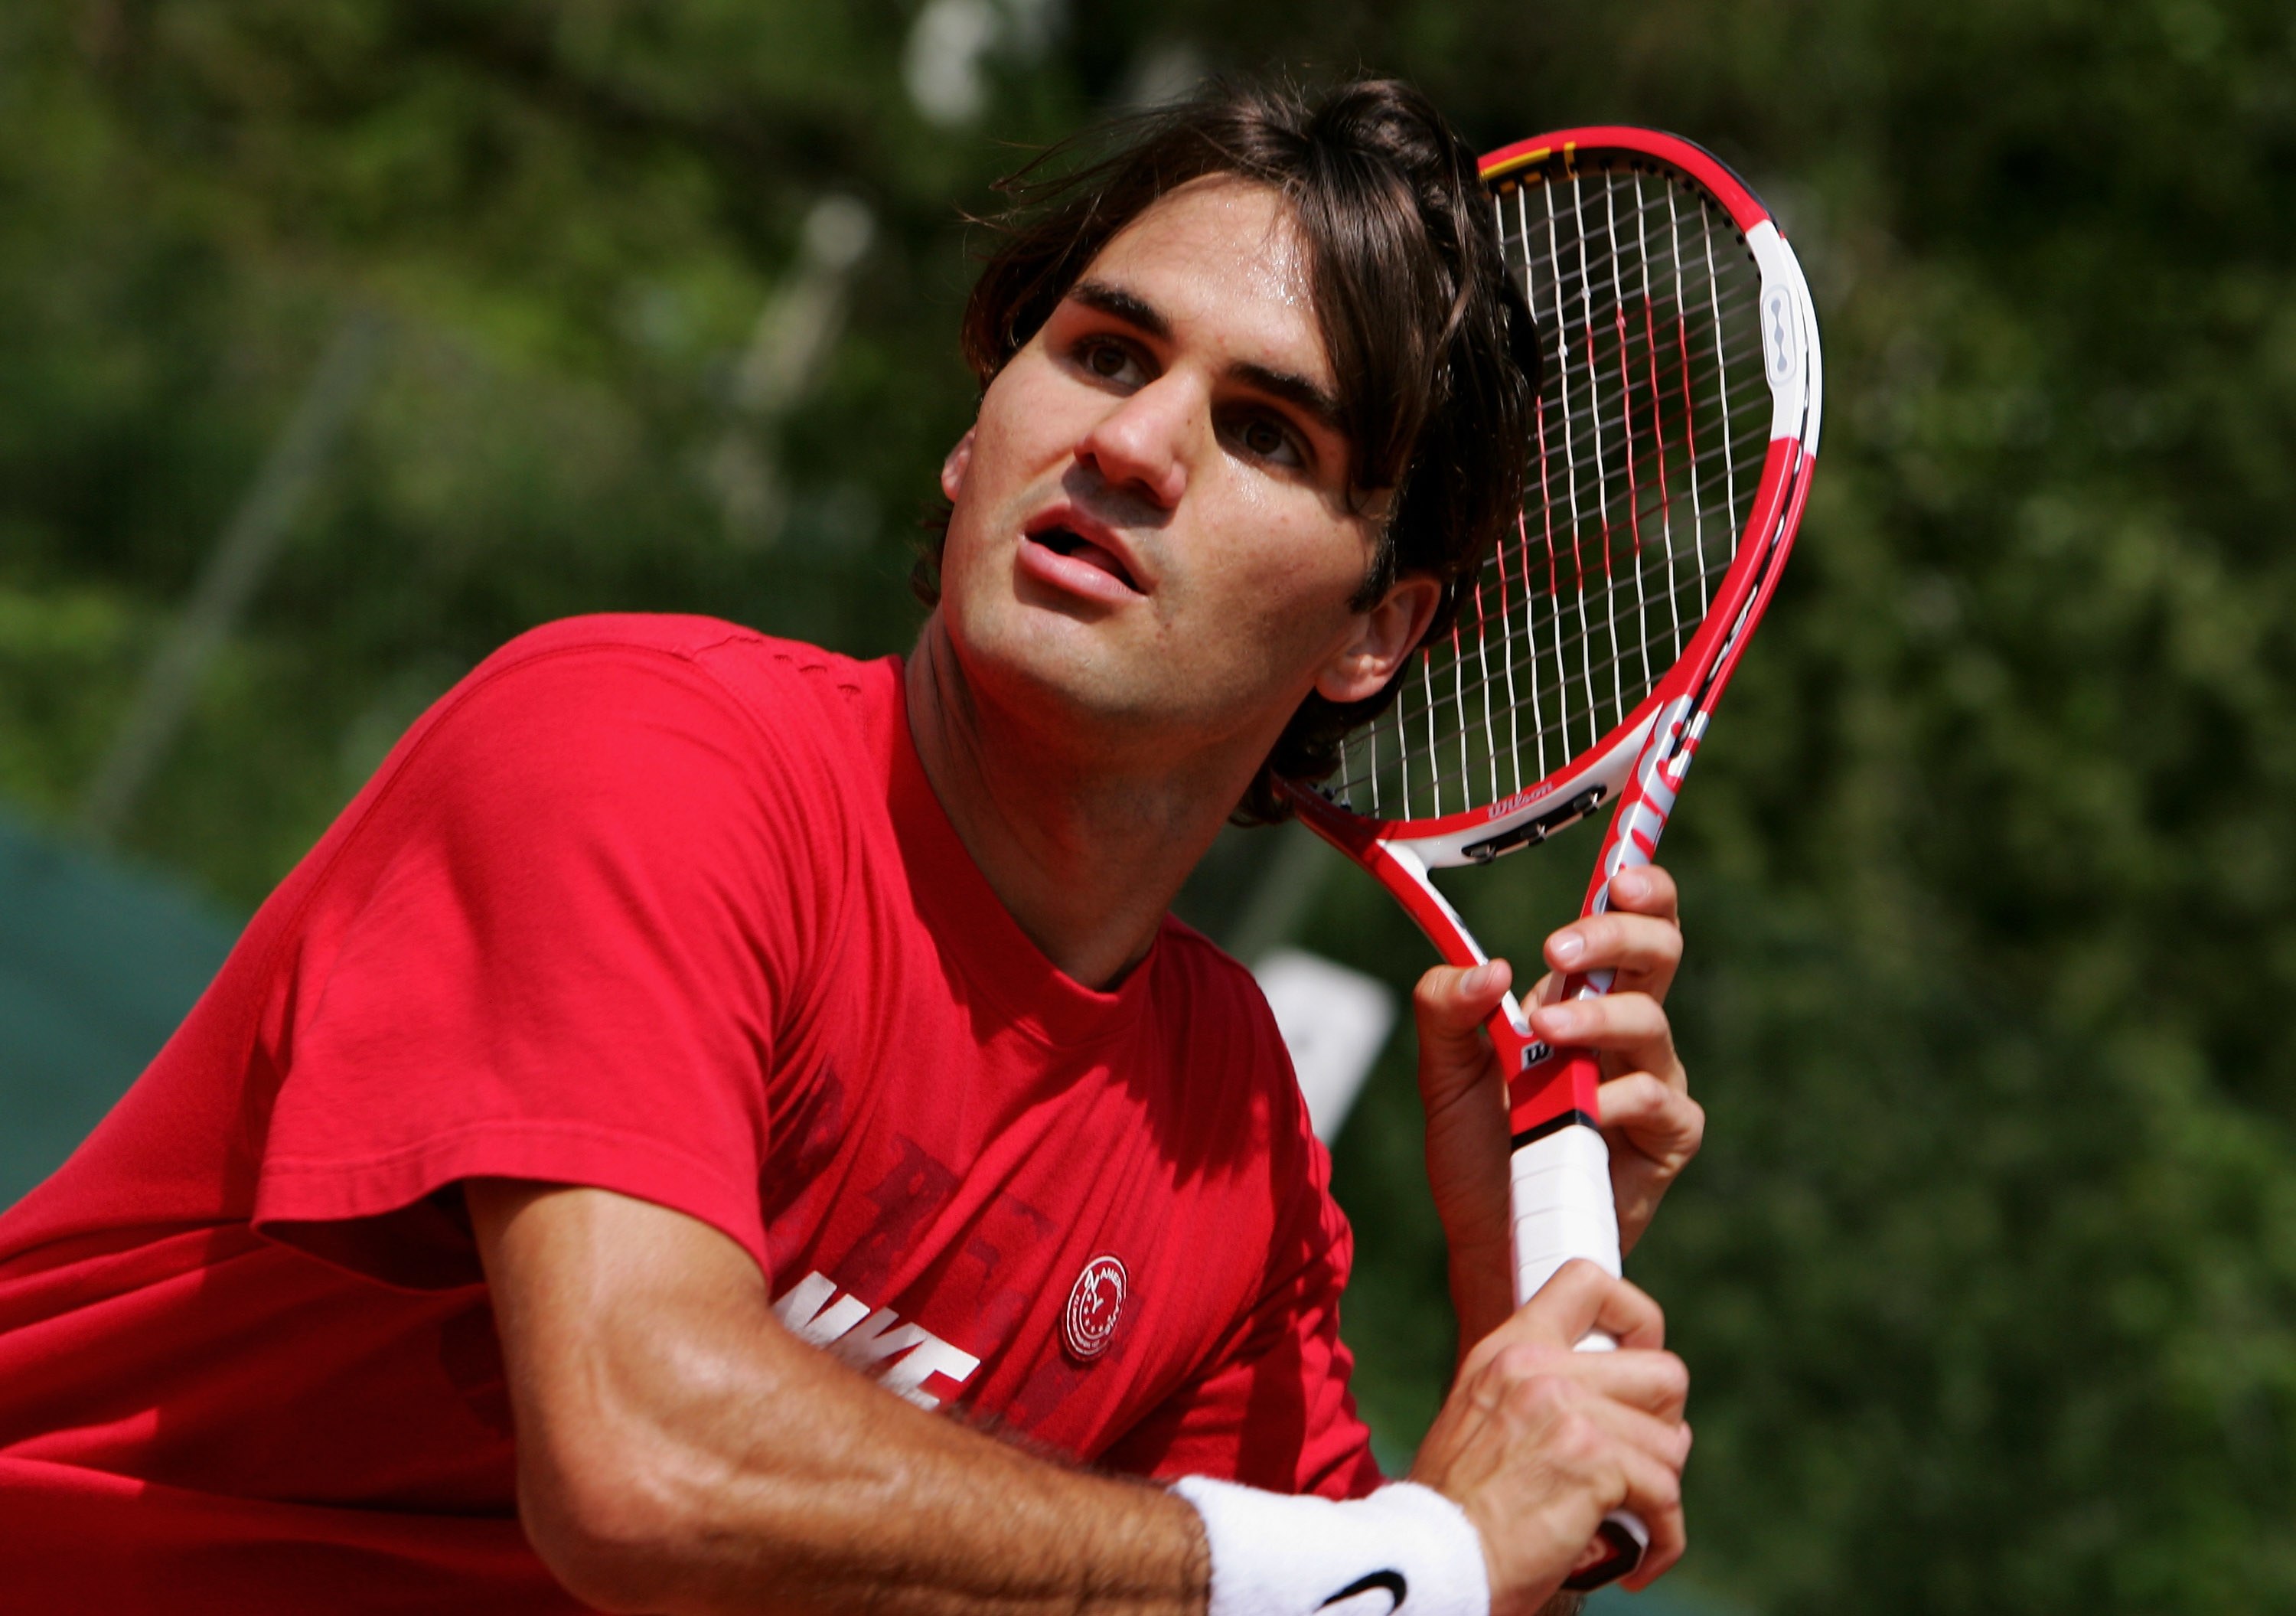 The Top 5 Roger Federer moments in Basel